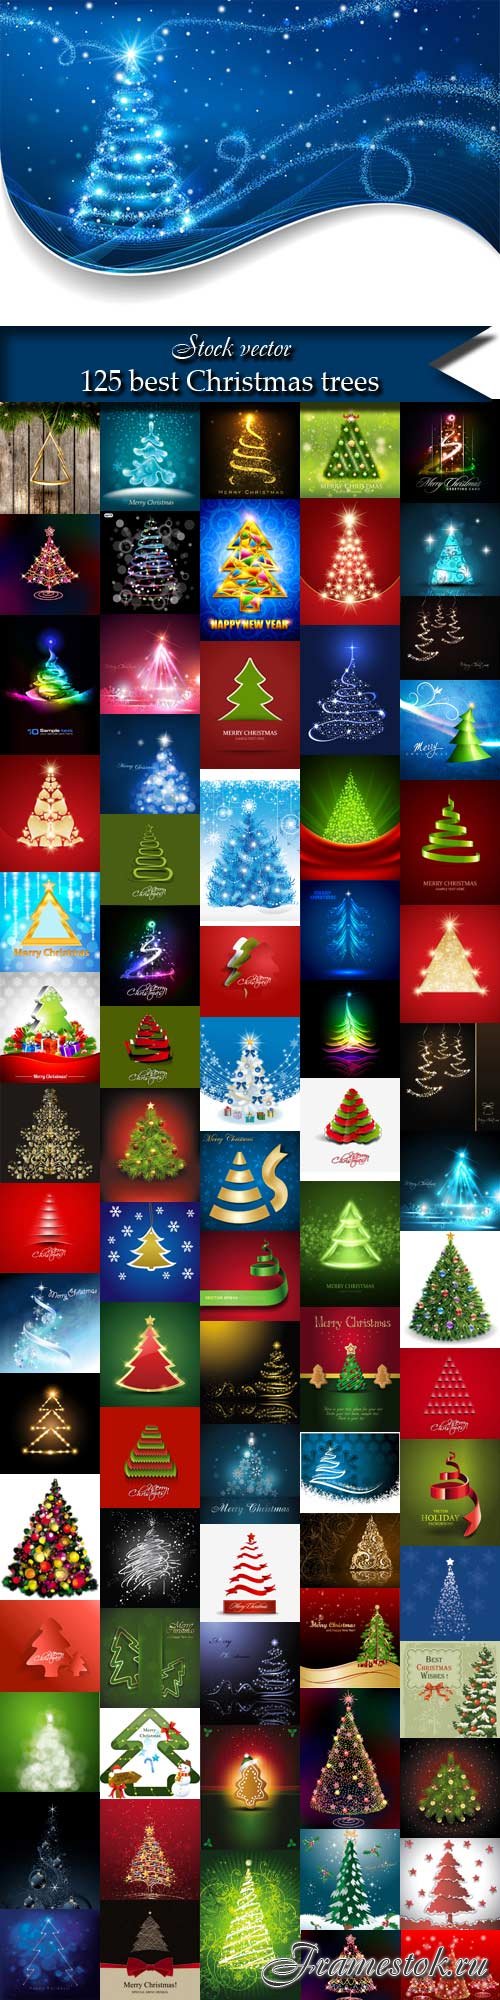 125 best Christmas trees